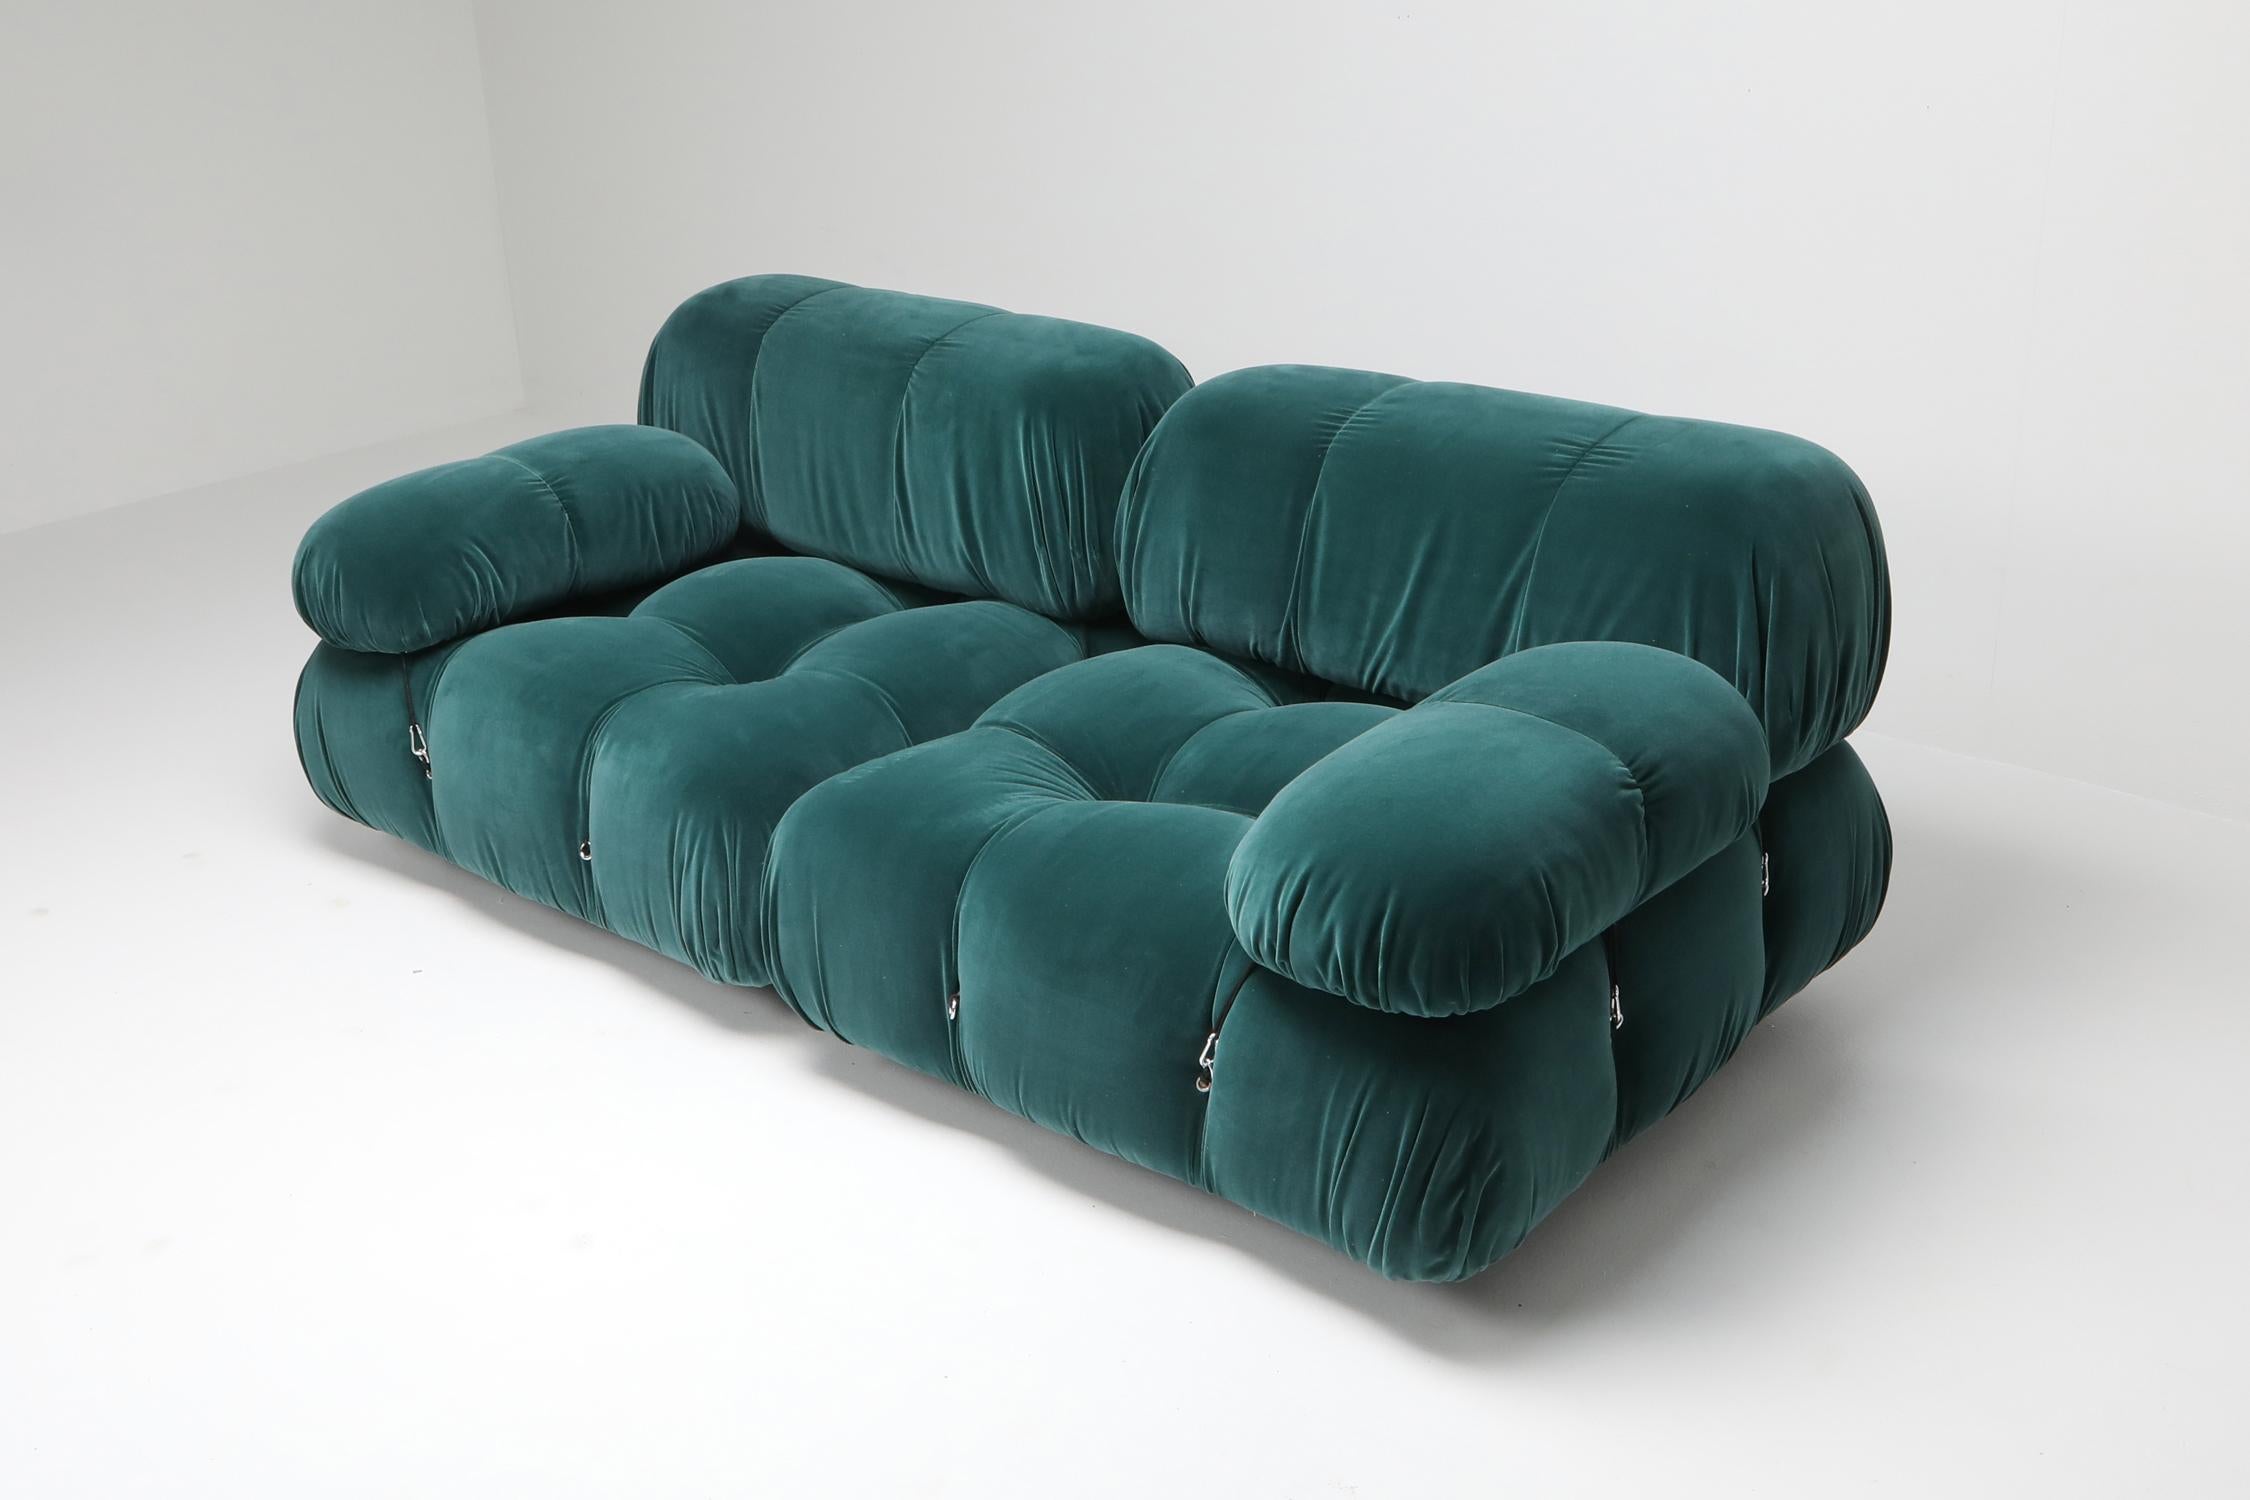 Mario Bellini's Camaleonda sectional sofa 1